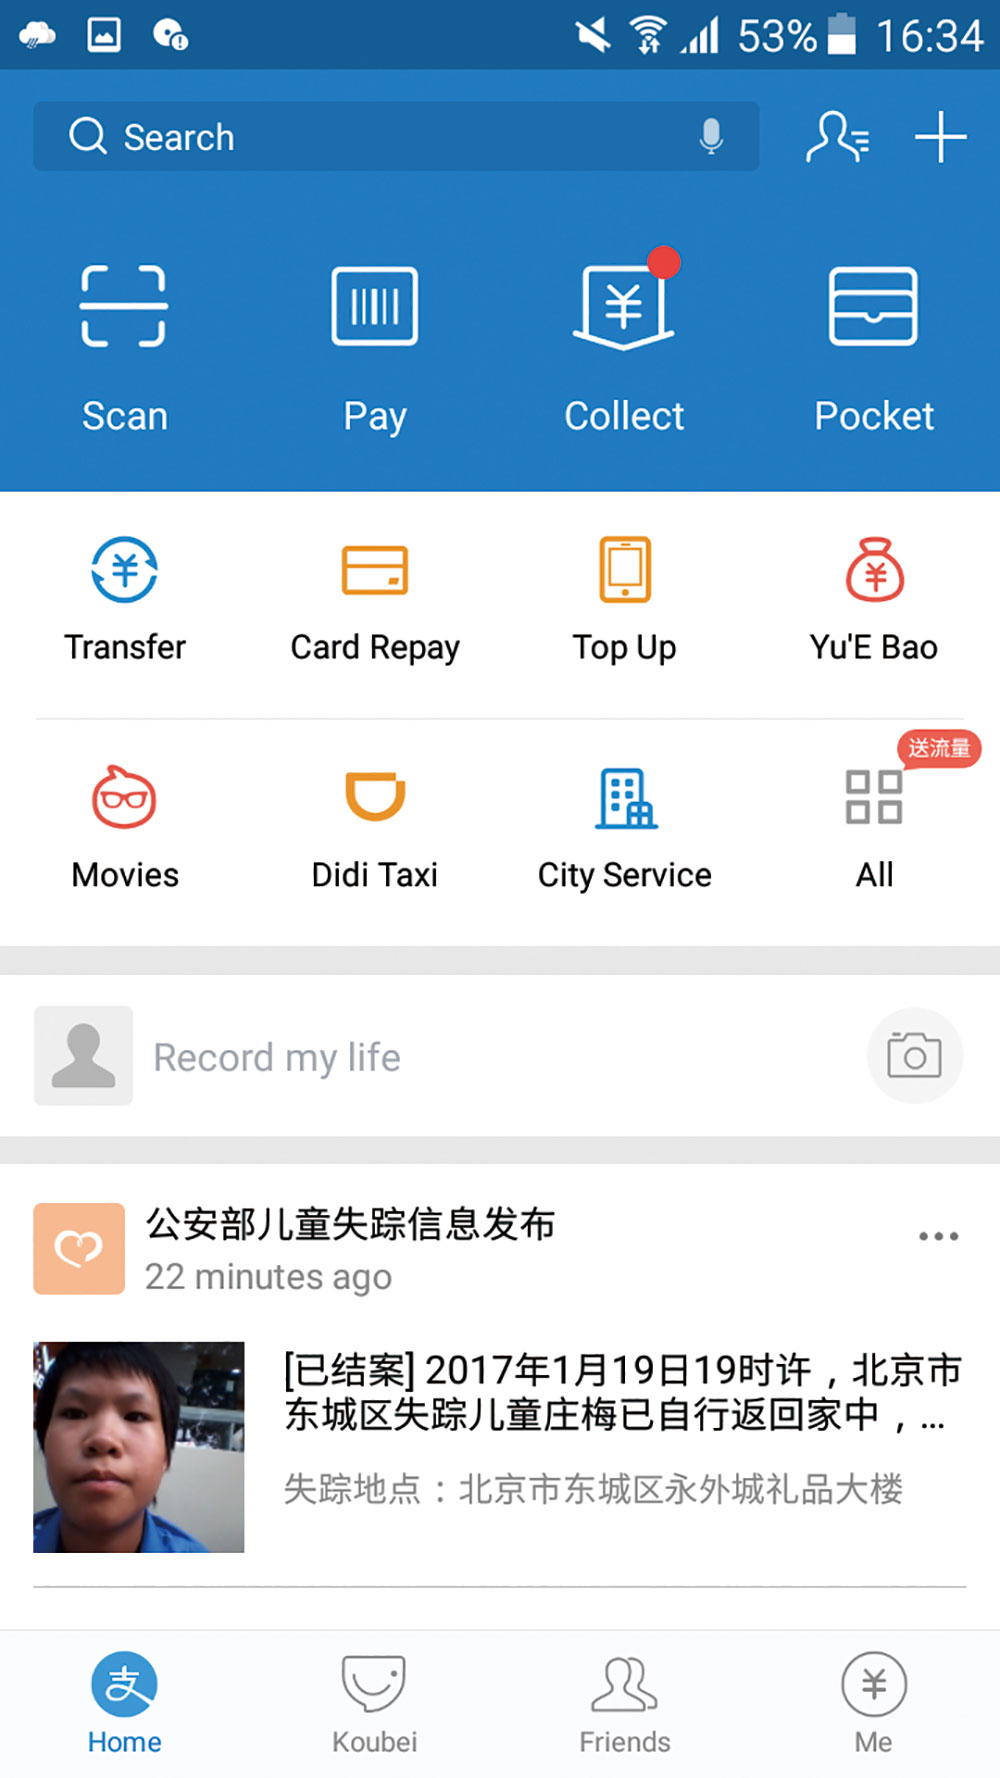 jd.com wechat pay china state morningpost